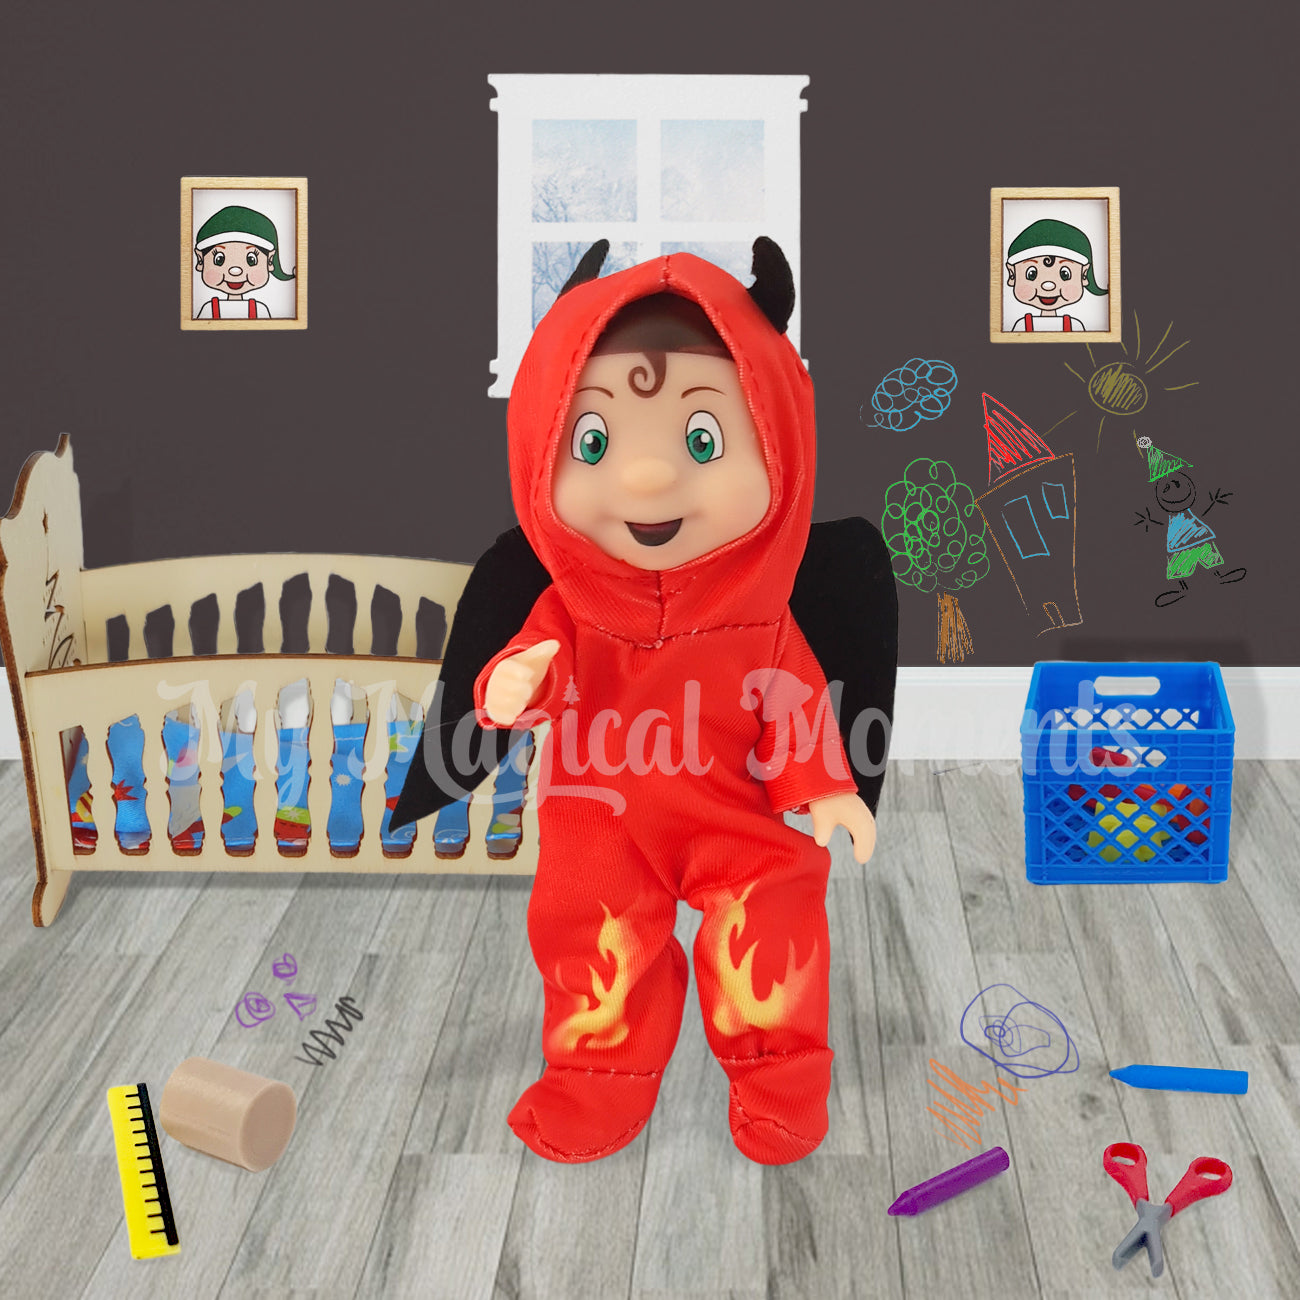 Elf toddler dressed as a toddler destroying his nursery